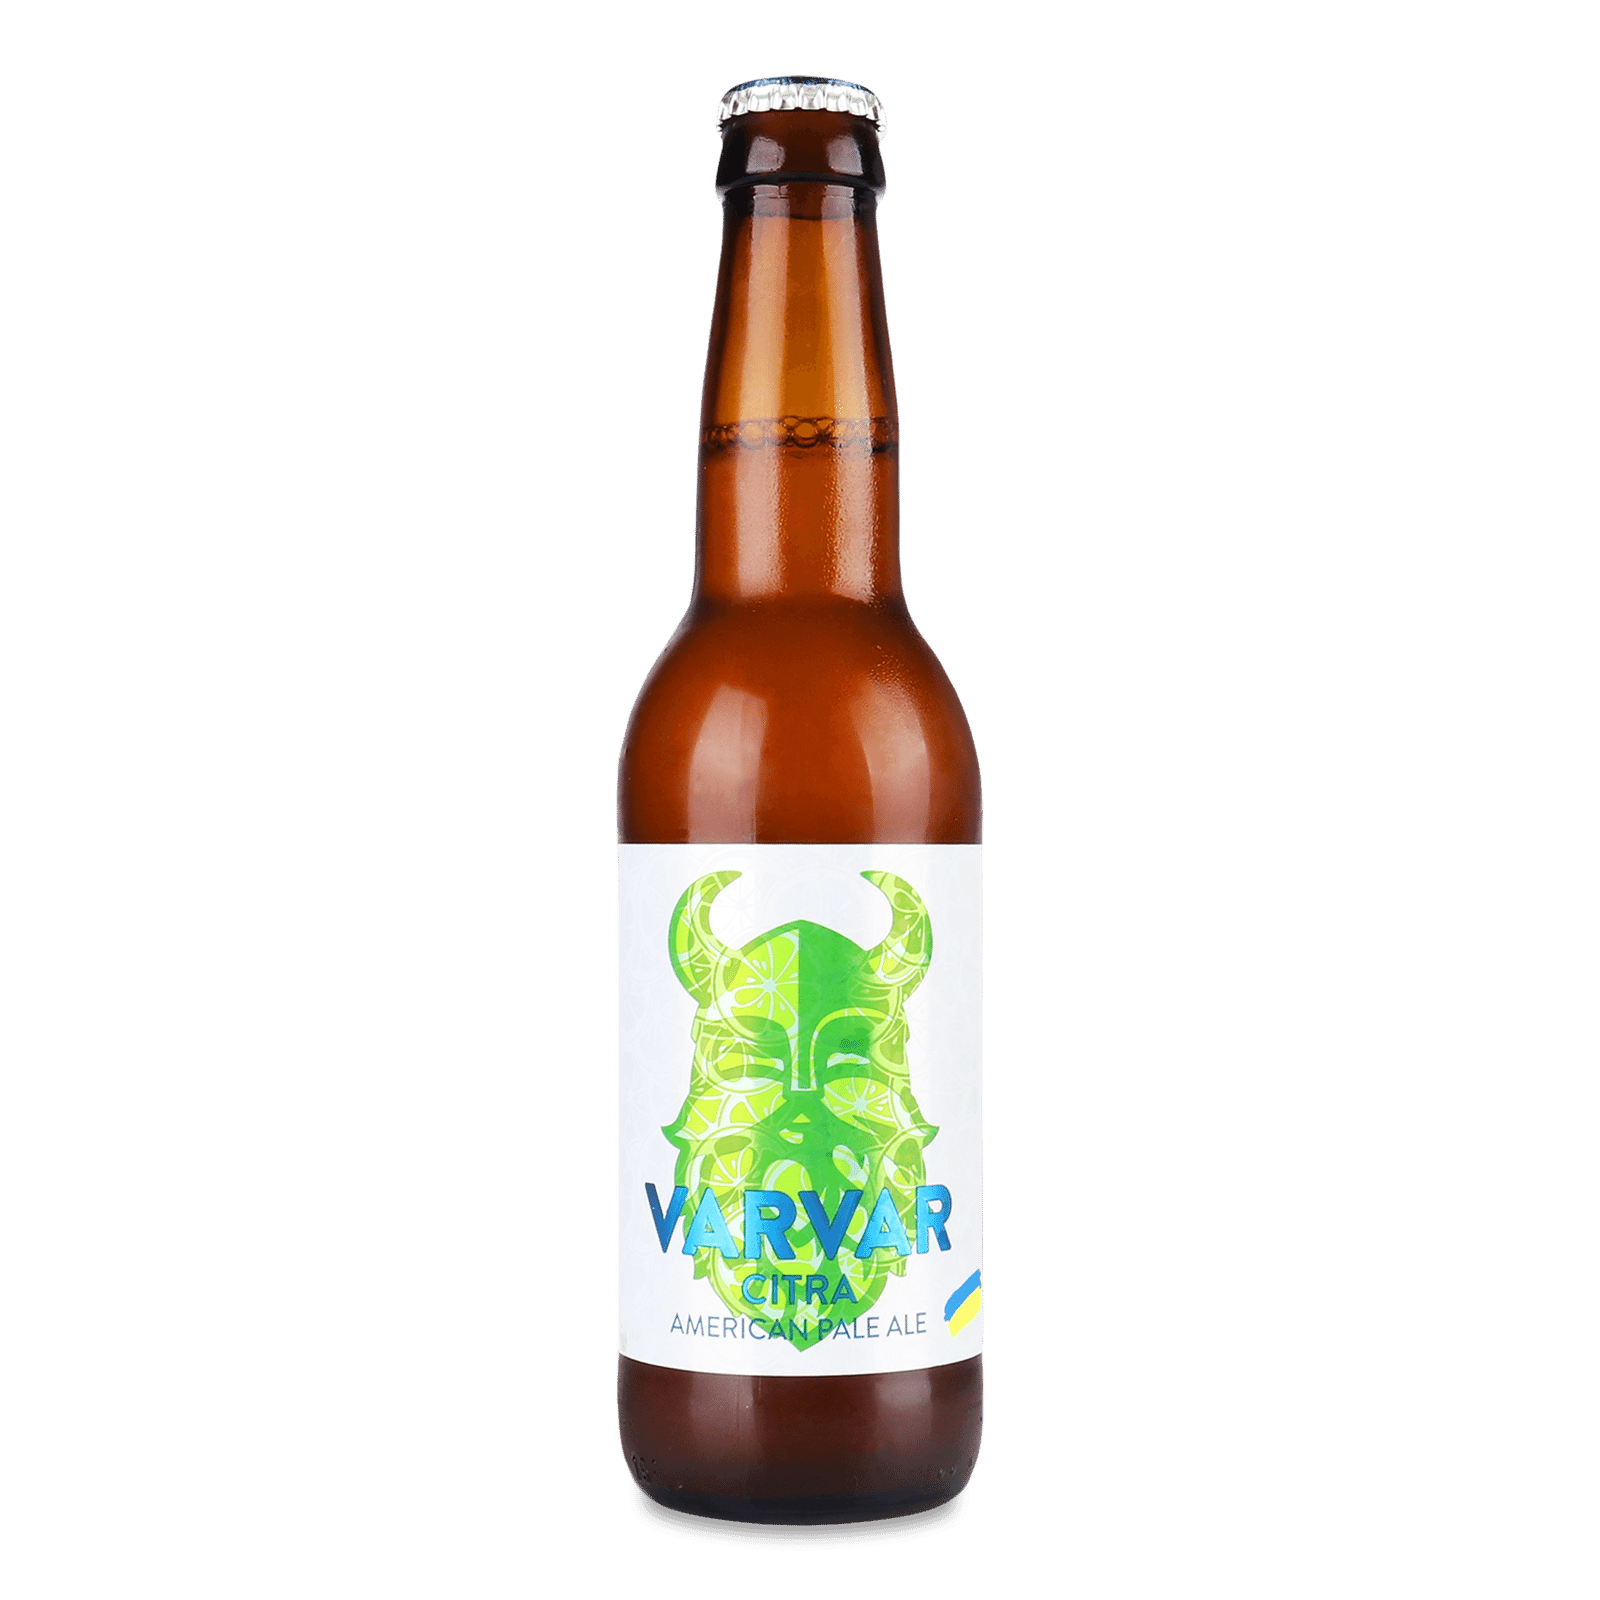 Пиво Varvar Citra American Pale Ale світле нефільтроване 6% - 1